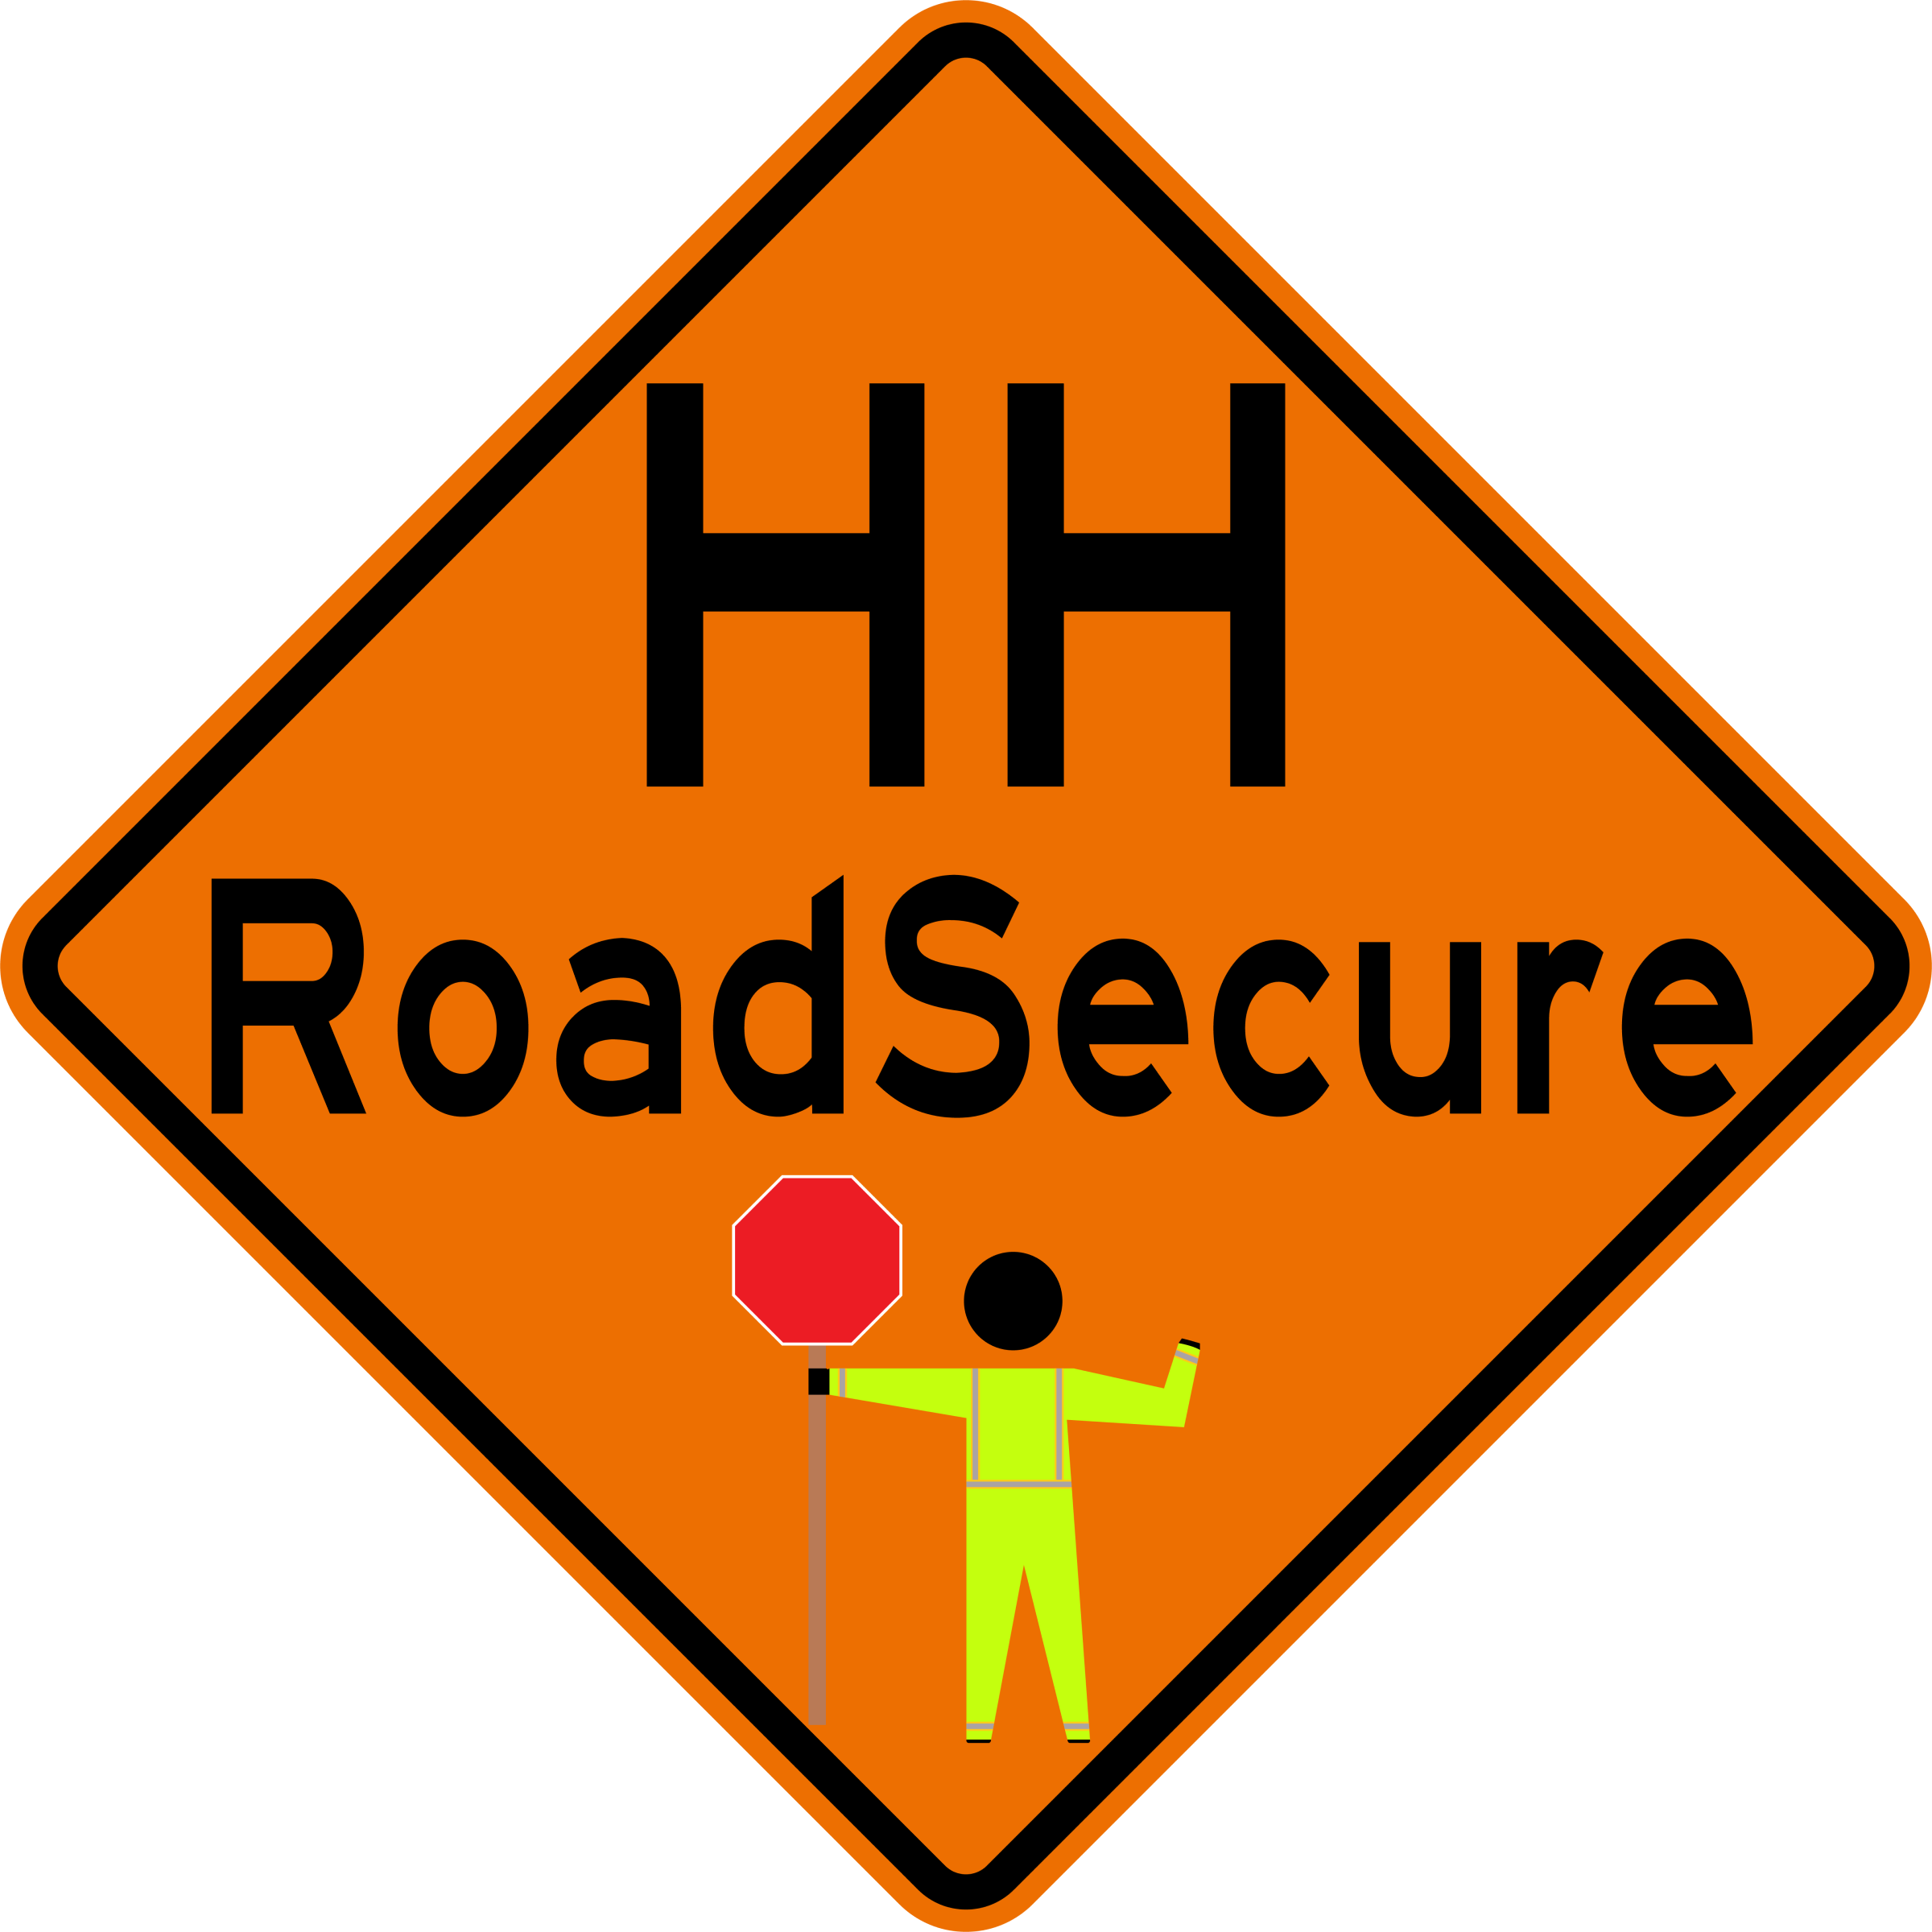 Hudson’s Hope RoadSecure